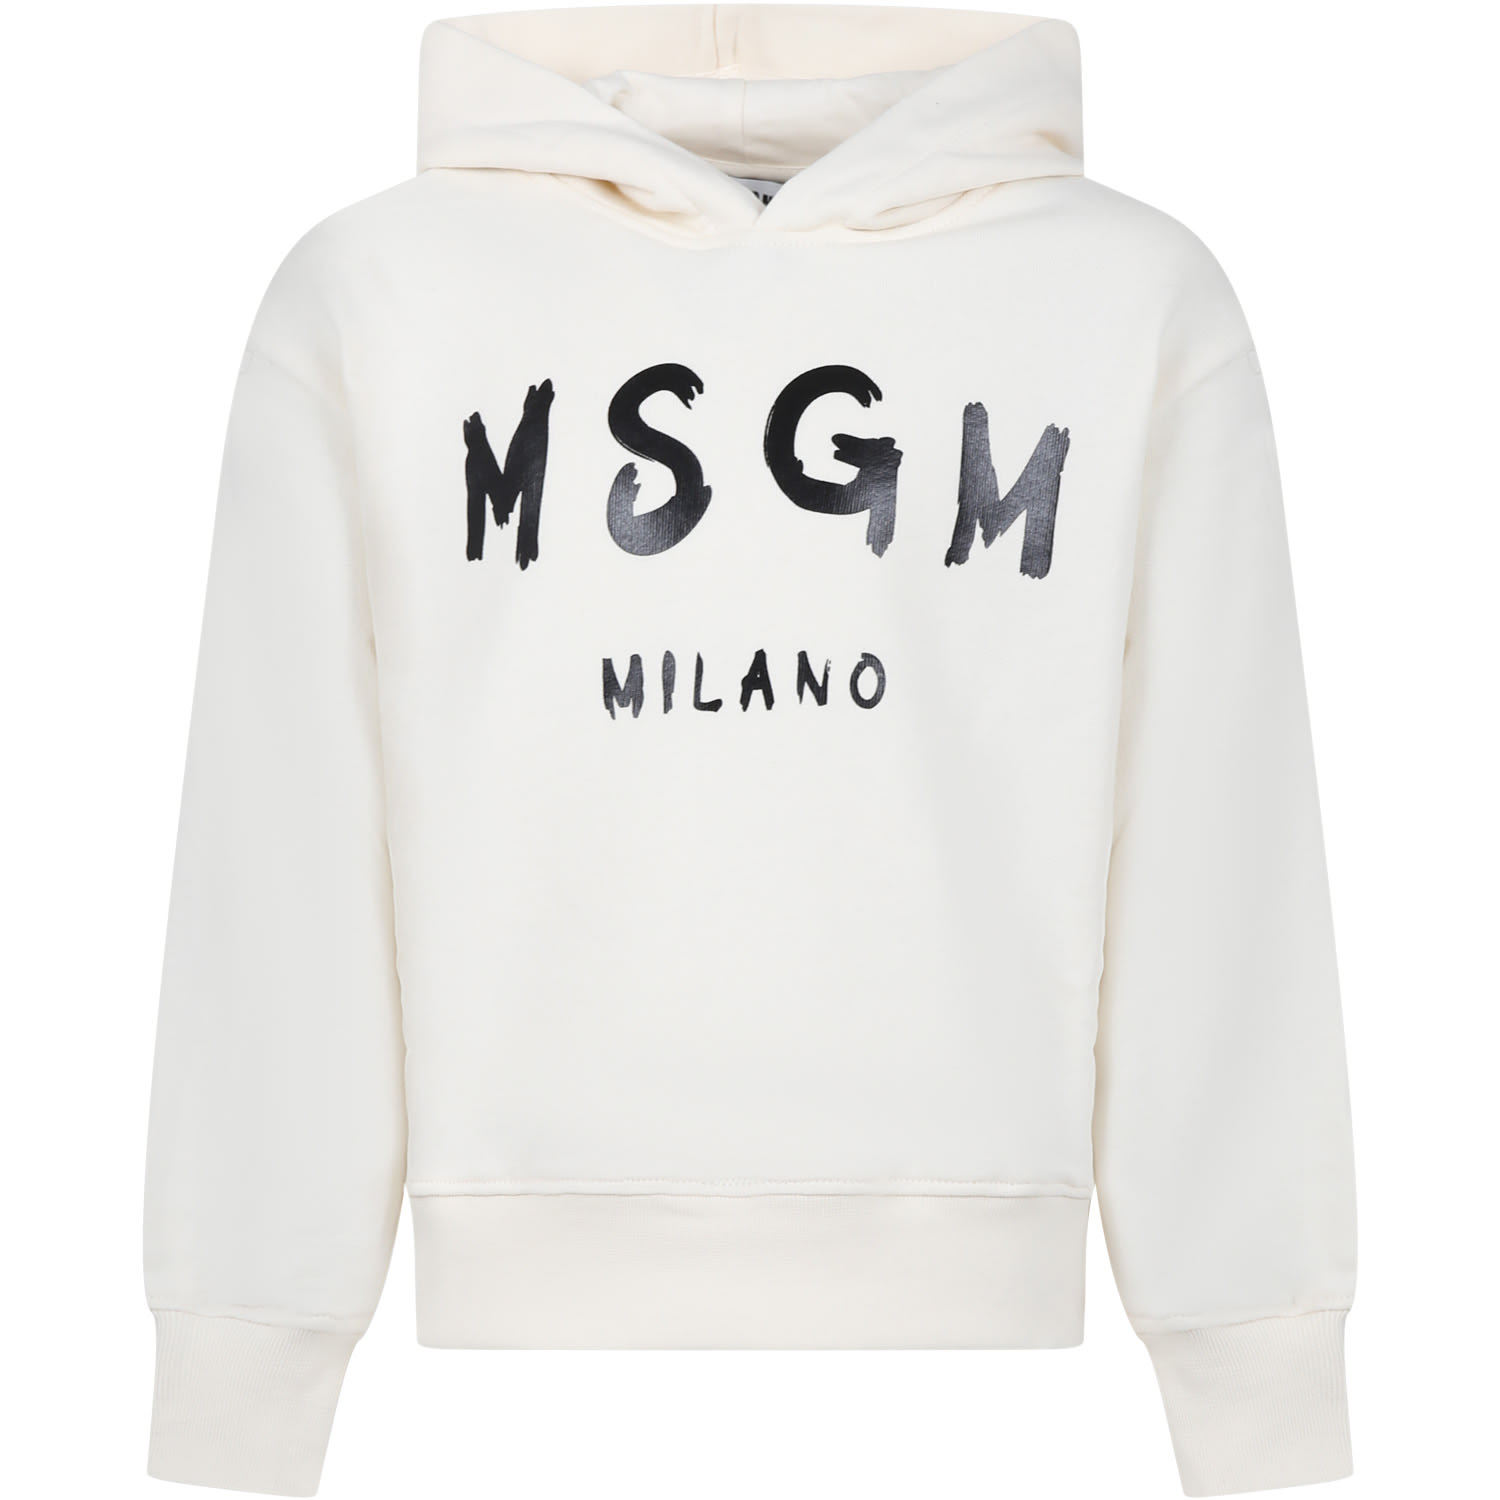 Msgm Ivory Sweatshirt For Kids With Logo